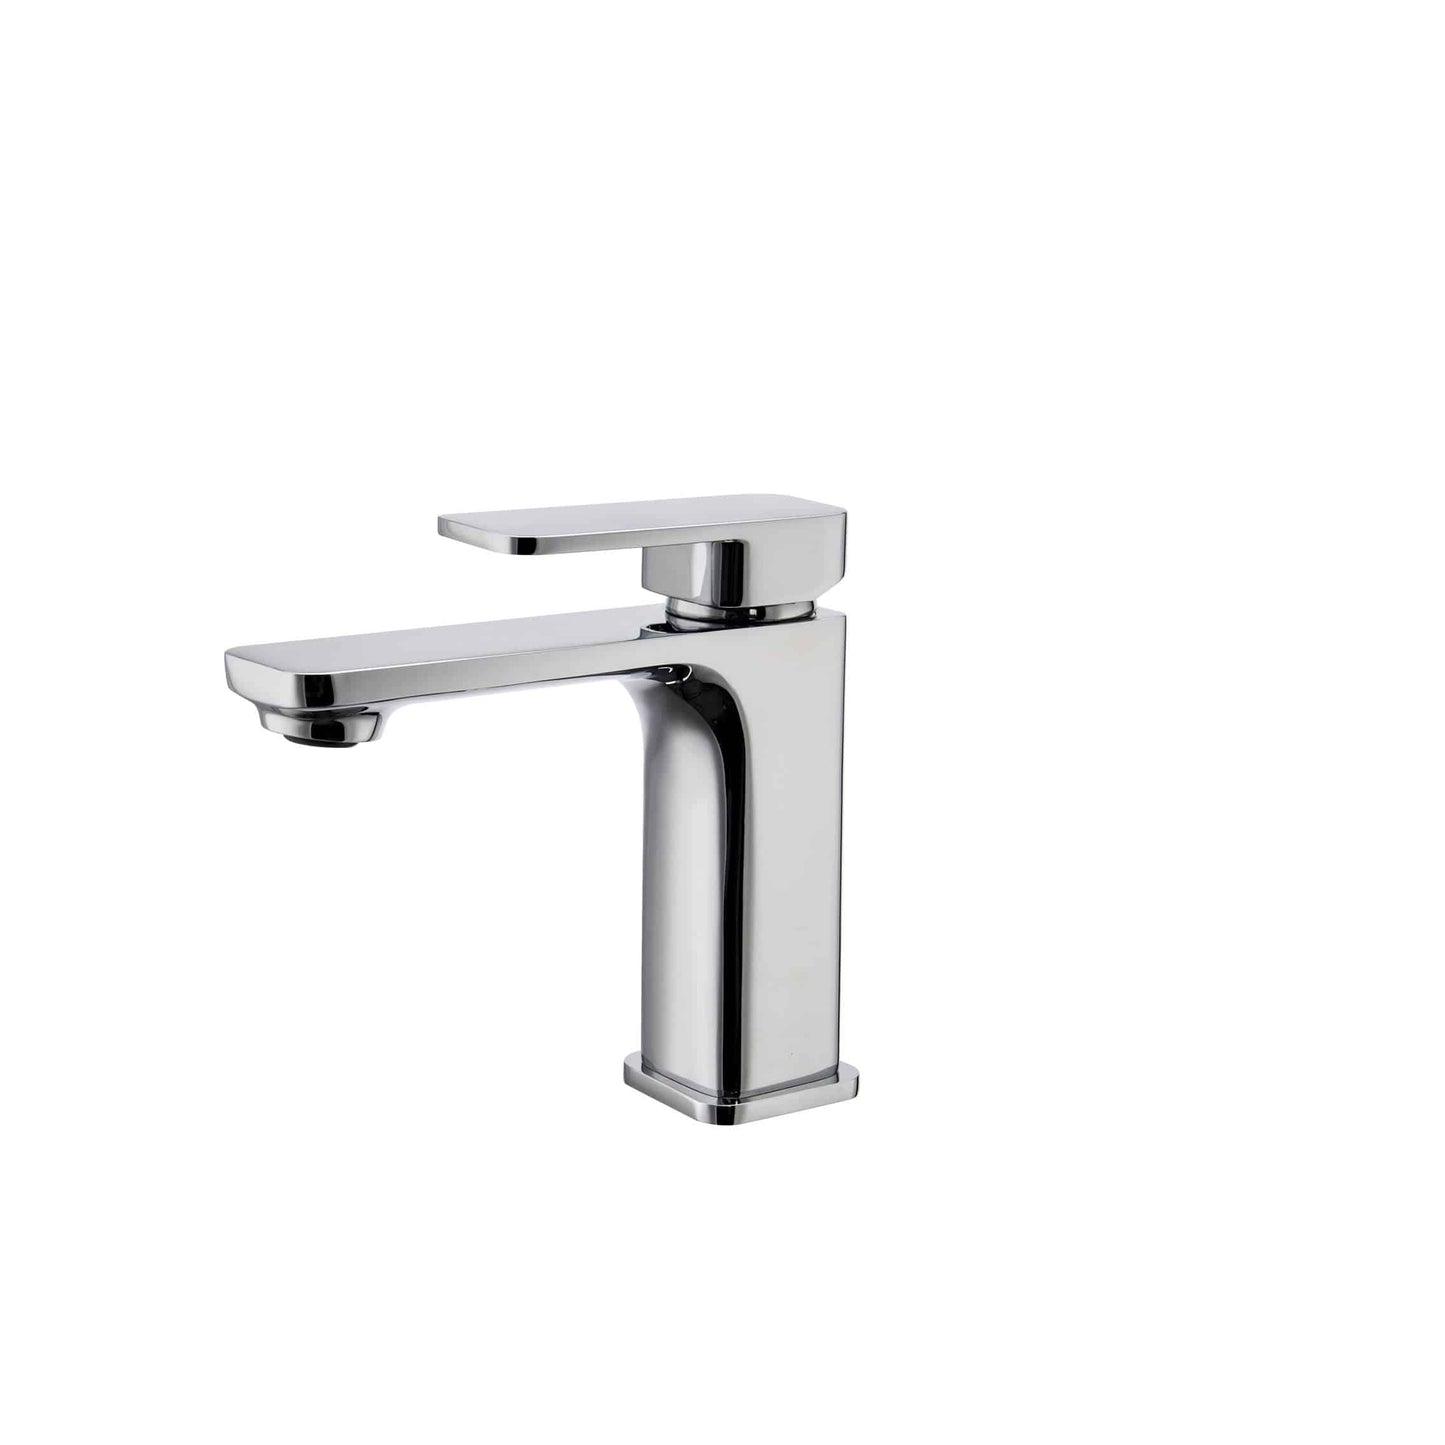 Stylish Vita Single Handle 6" Bathroom Faucet for Single Hole Brass Basin Mixer Tap, Polished Chrome Finish B-102C